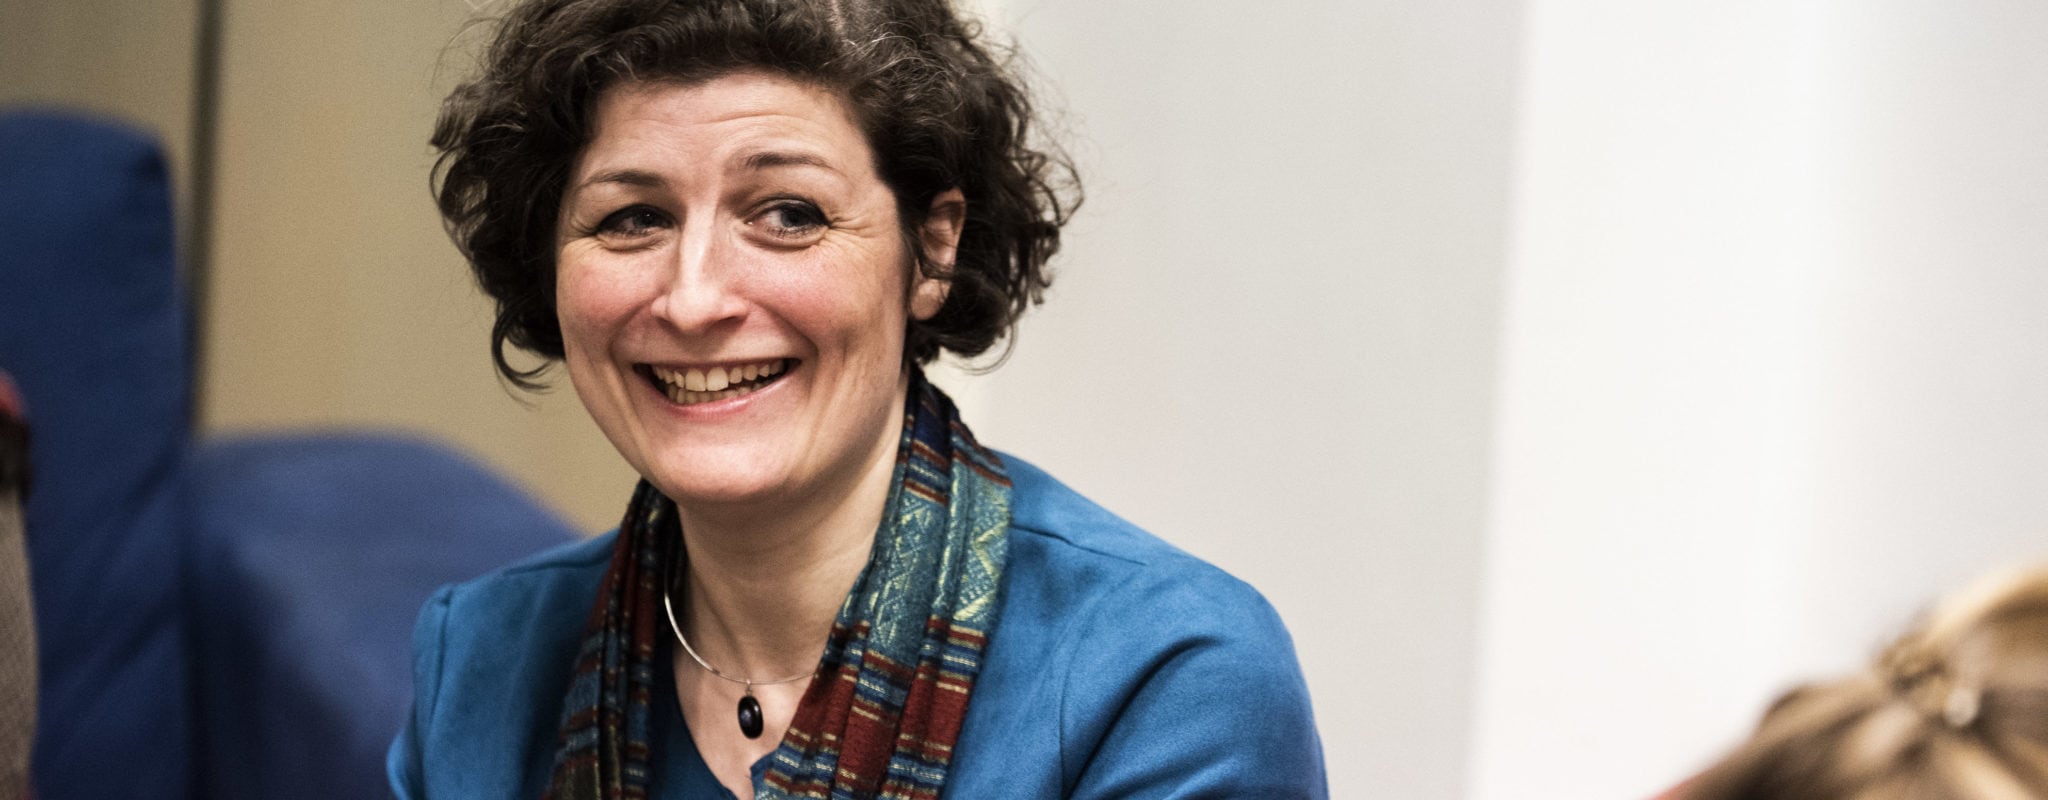 Municipales : Jeanne Barseghian en tête à Strasbourg